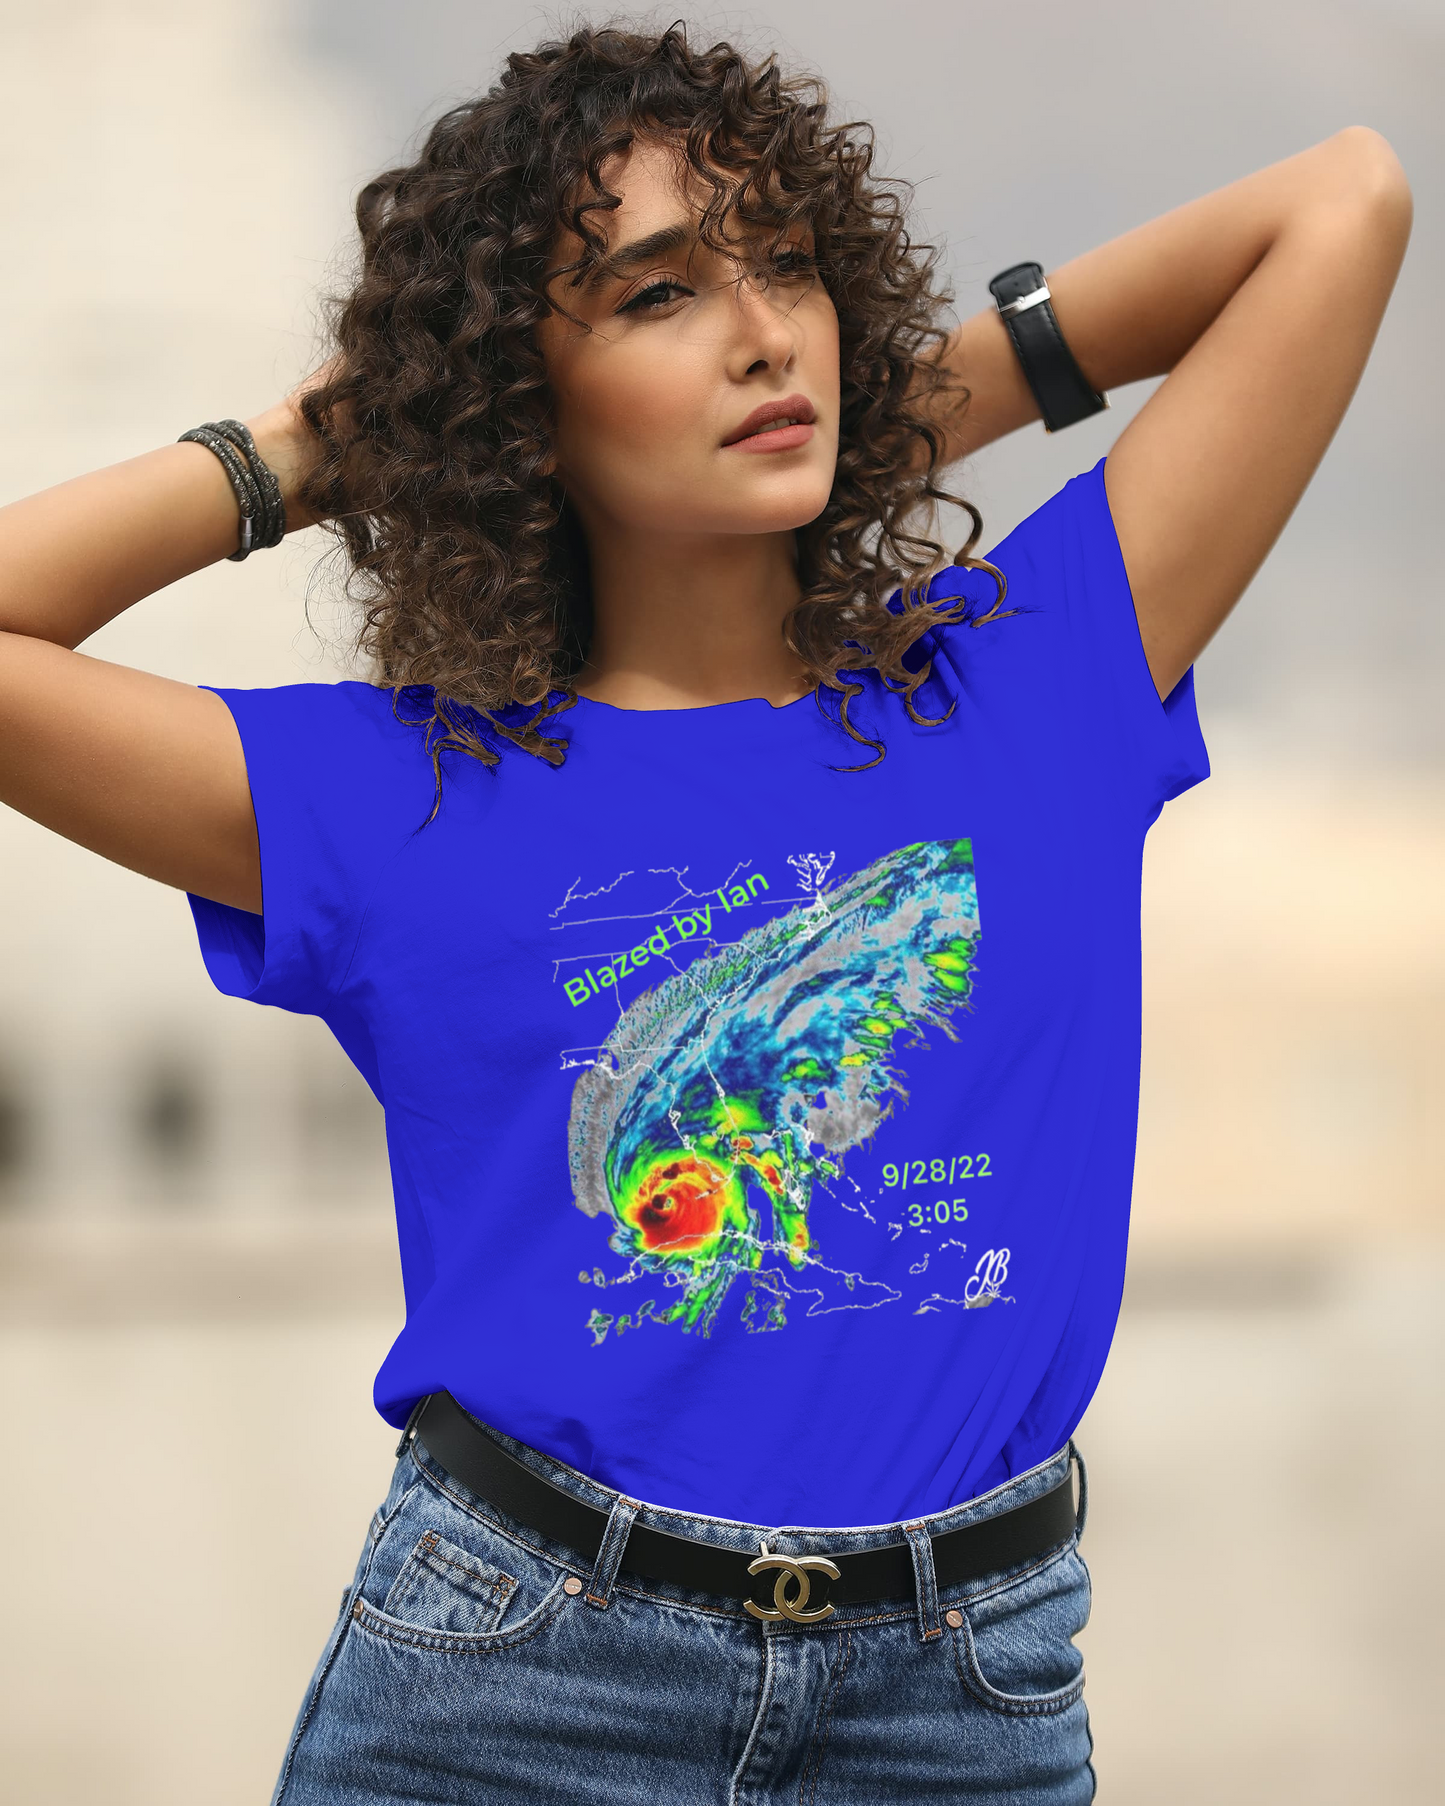 Hurricane Ian Refief Shirt